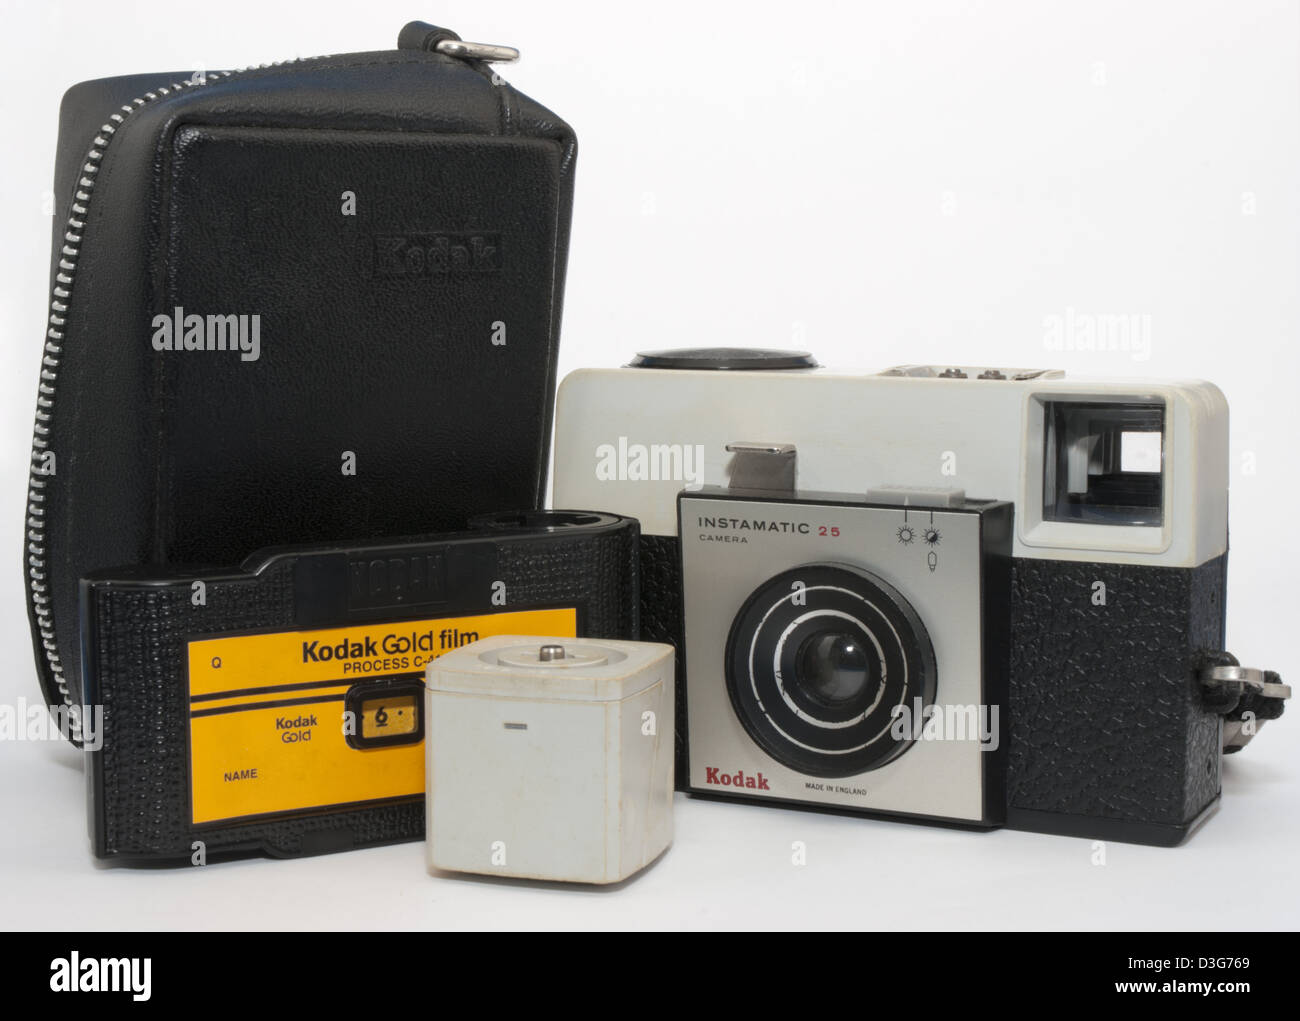 Kodak instamatic 25 126 telecamera con custodia, 126 film cartuccia e hot shoe adattatore per flash cubo. Foto Stock